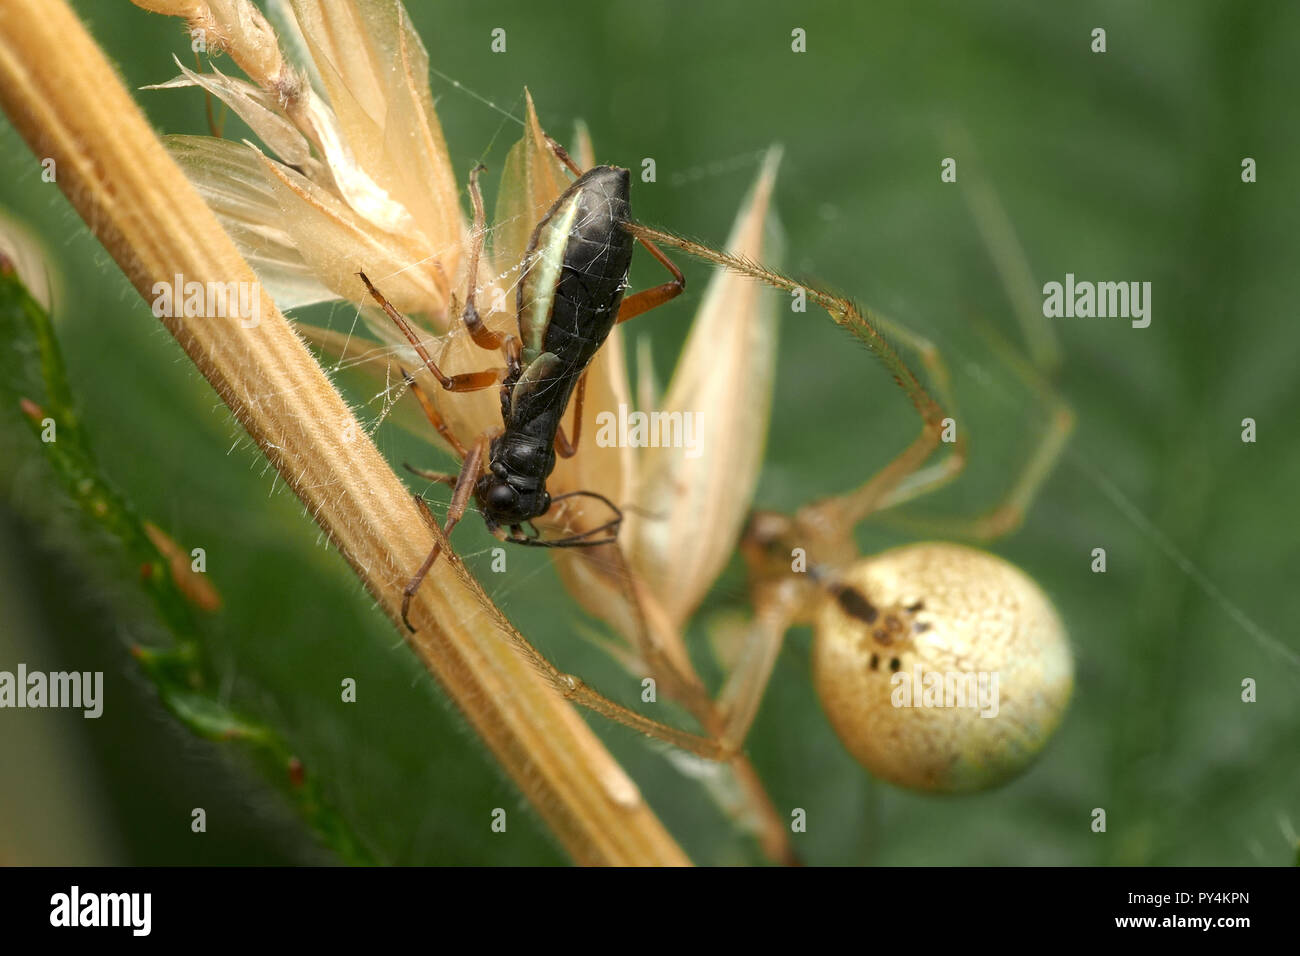 Pithanus maerkelii mirid bug caught in a spiders web. Tipperary, Ireland Stock Photo